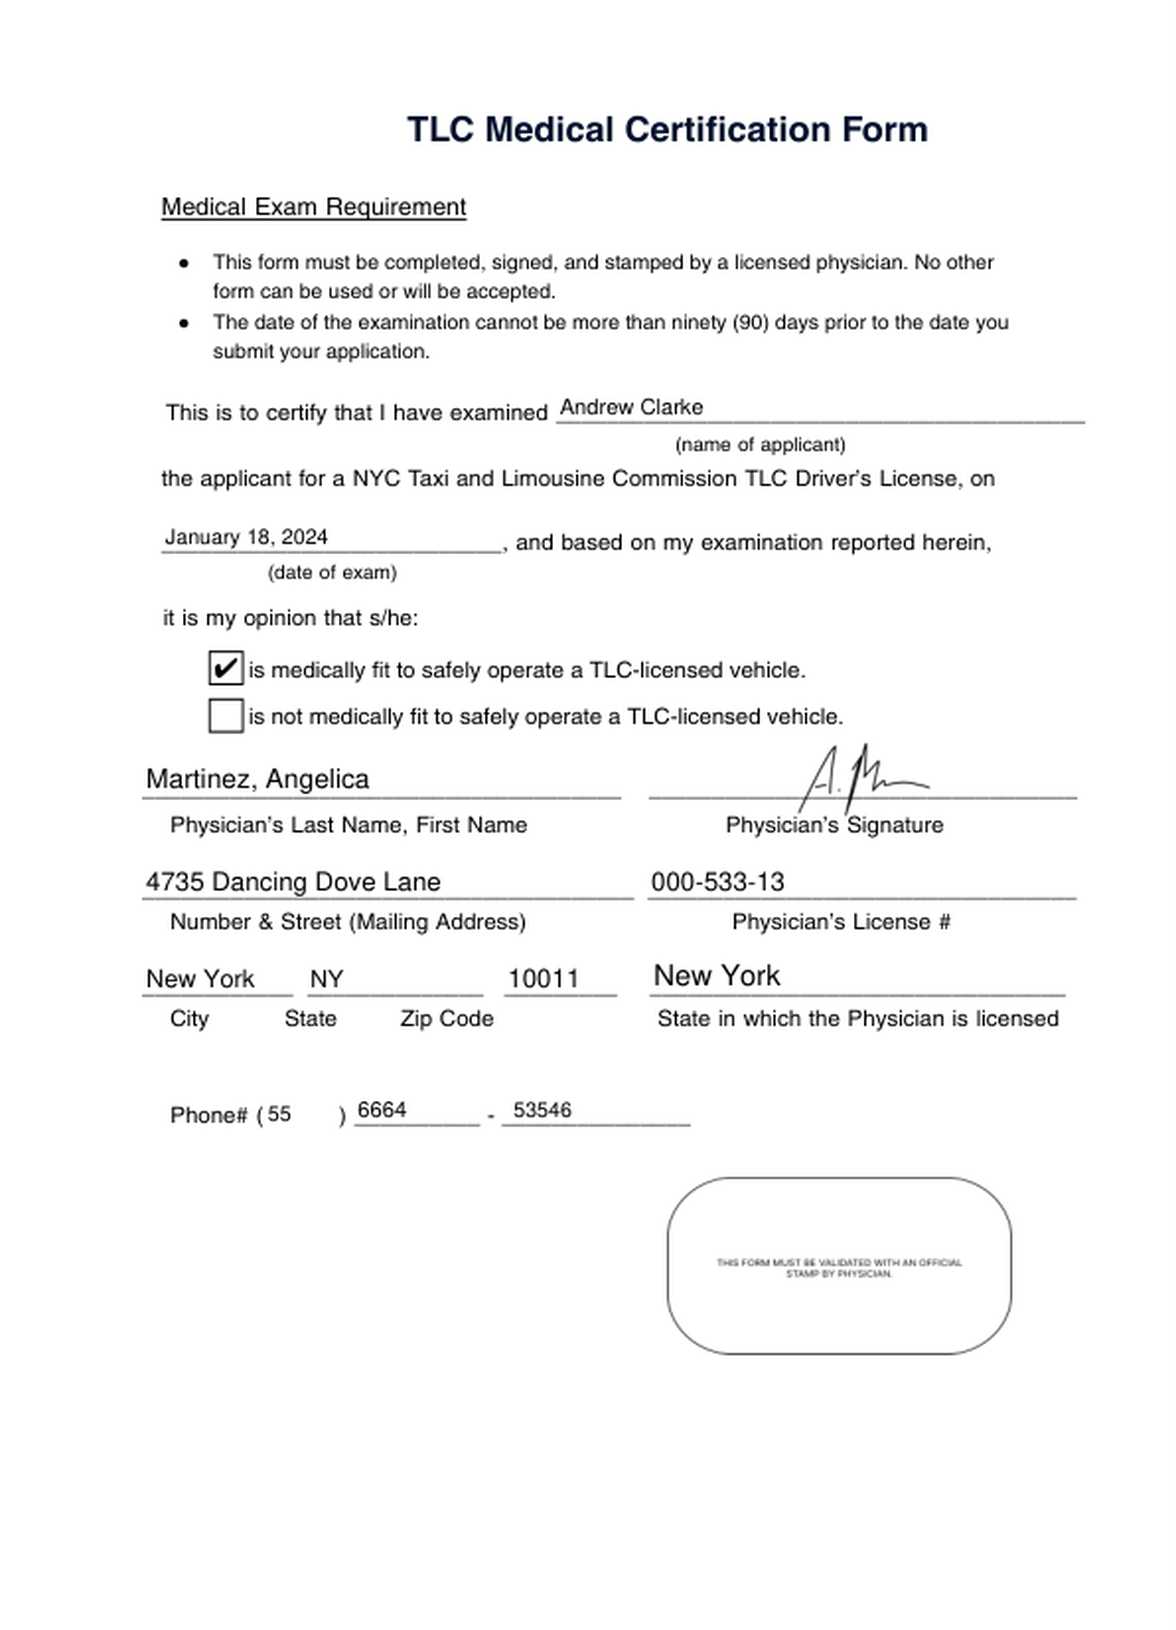 TLC Medical Certification Form PDF Example